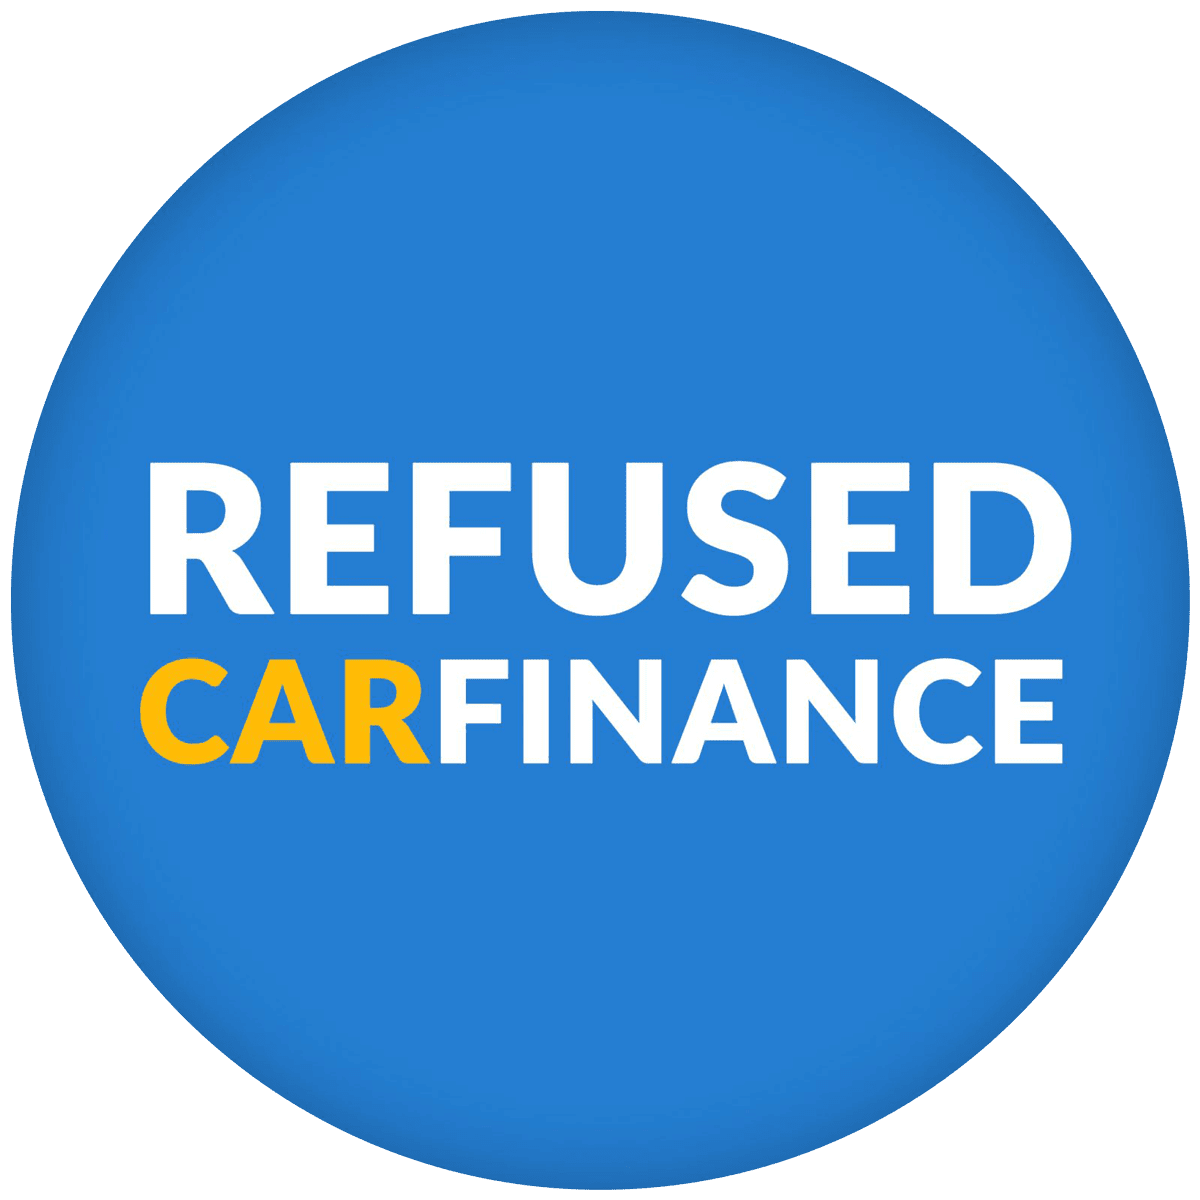 Refused Car Finance